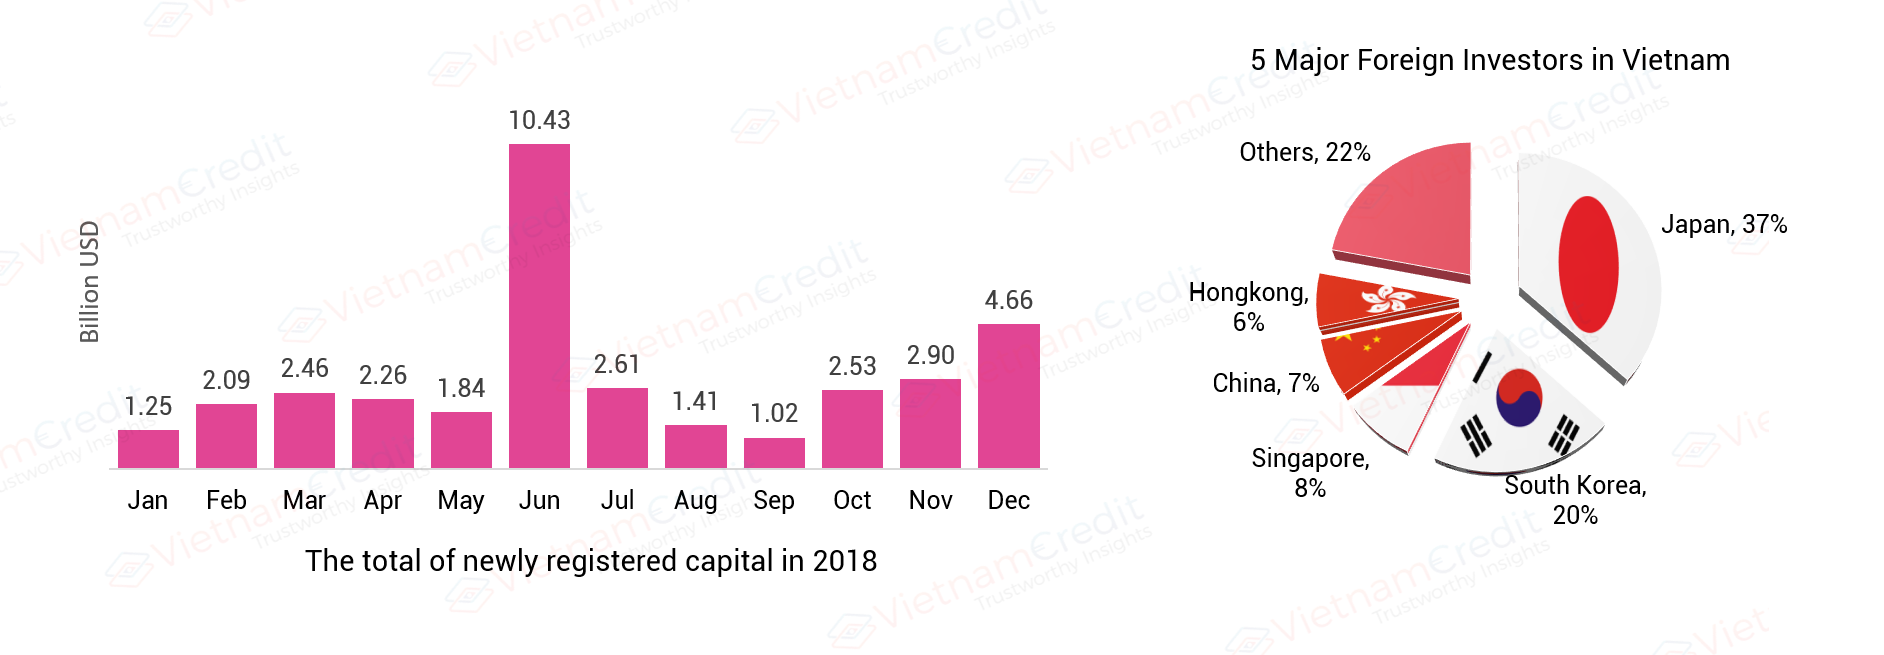 Vietnam Economy 2018 in 9 indicators_4